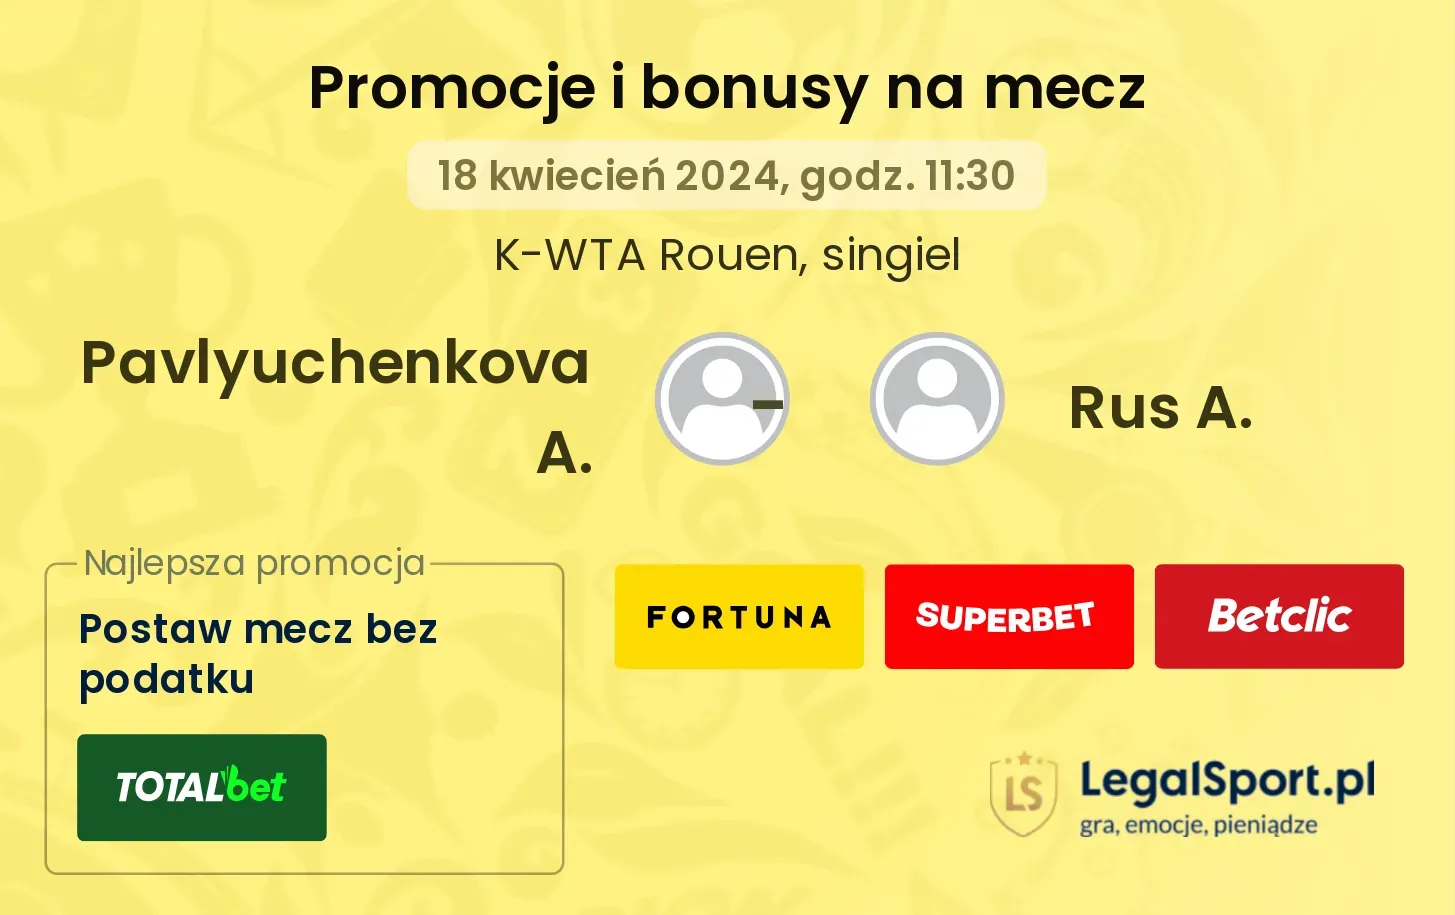 Pavlyuchenkova A. - Rus A. promocje bonusy na mecz